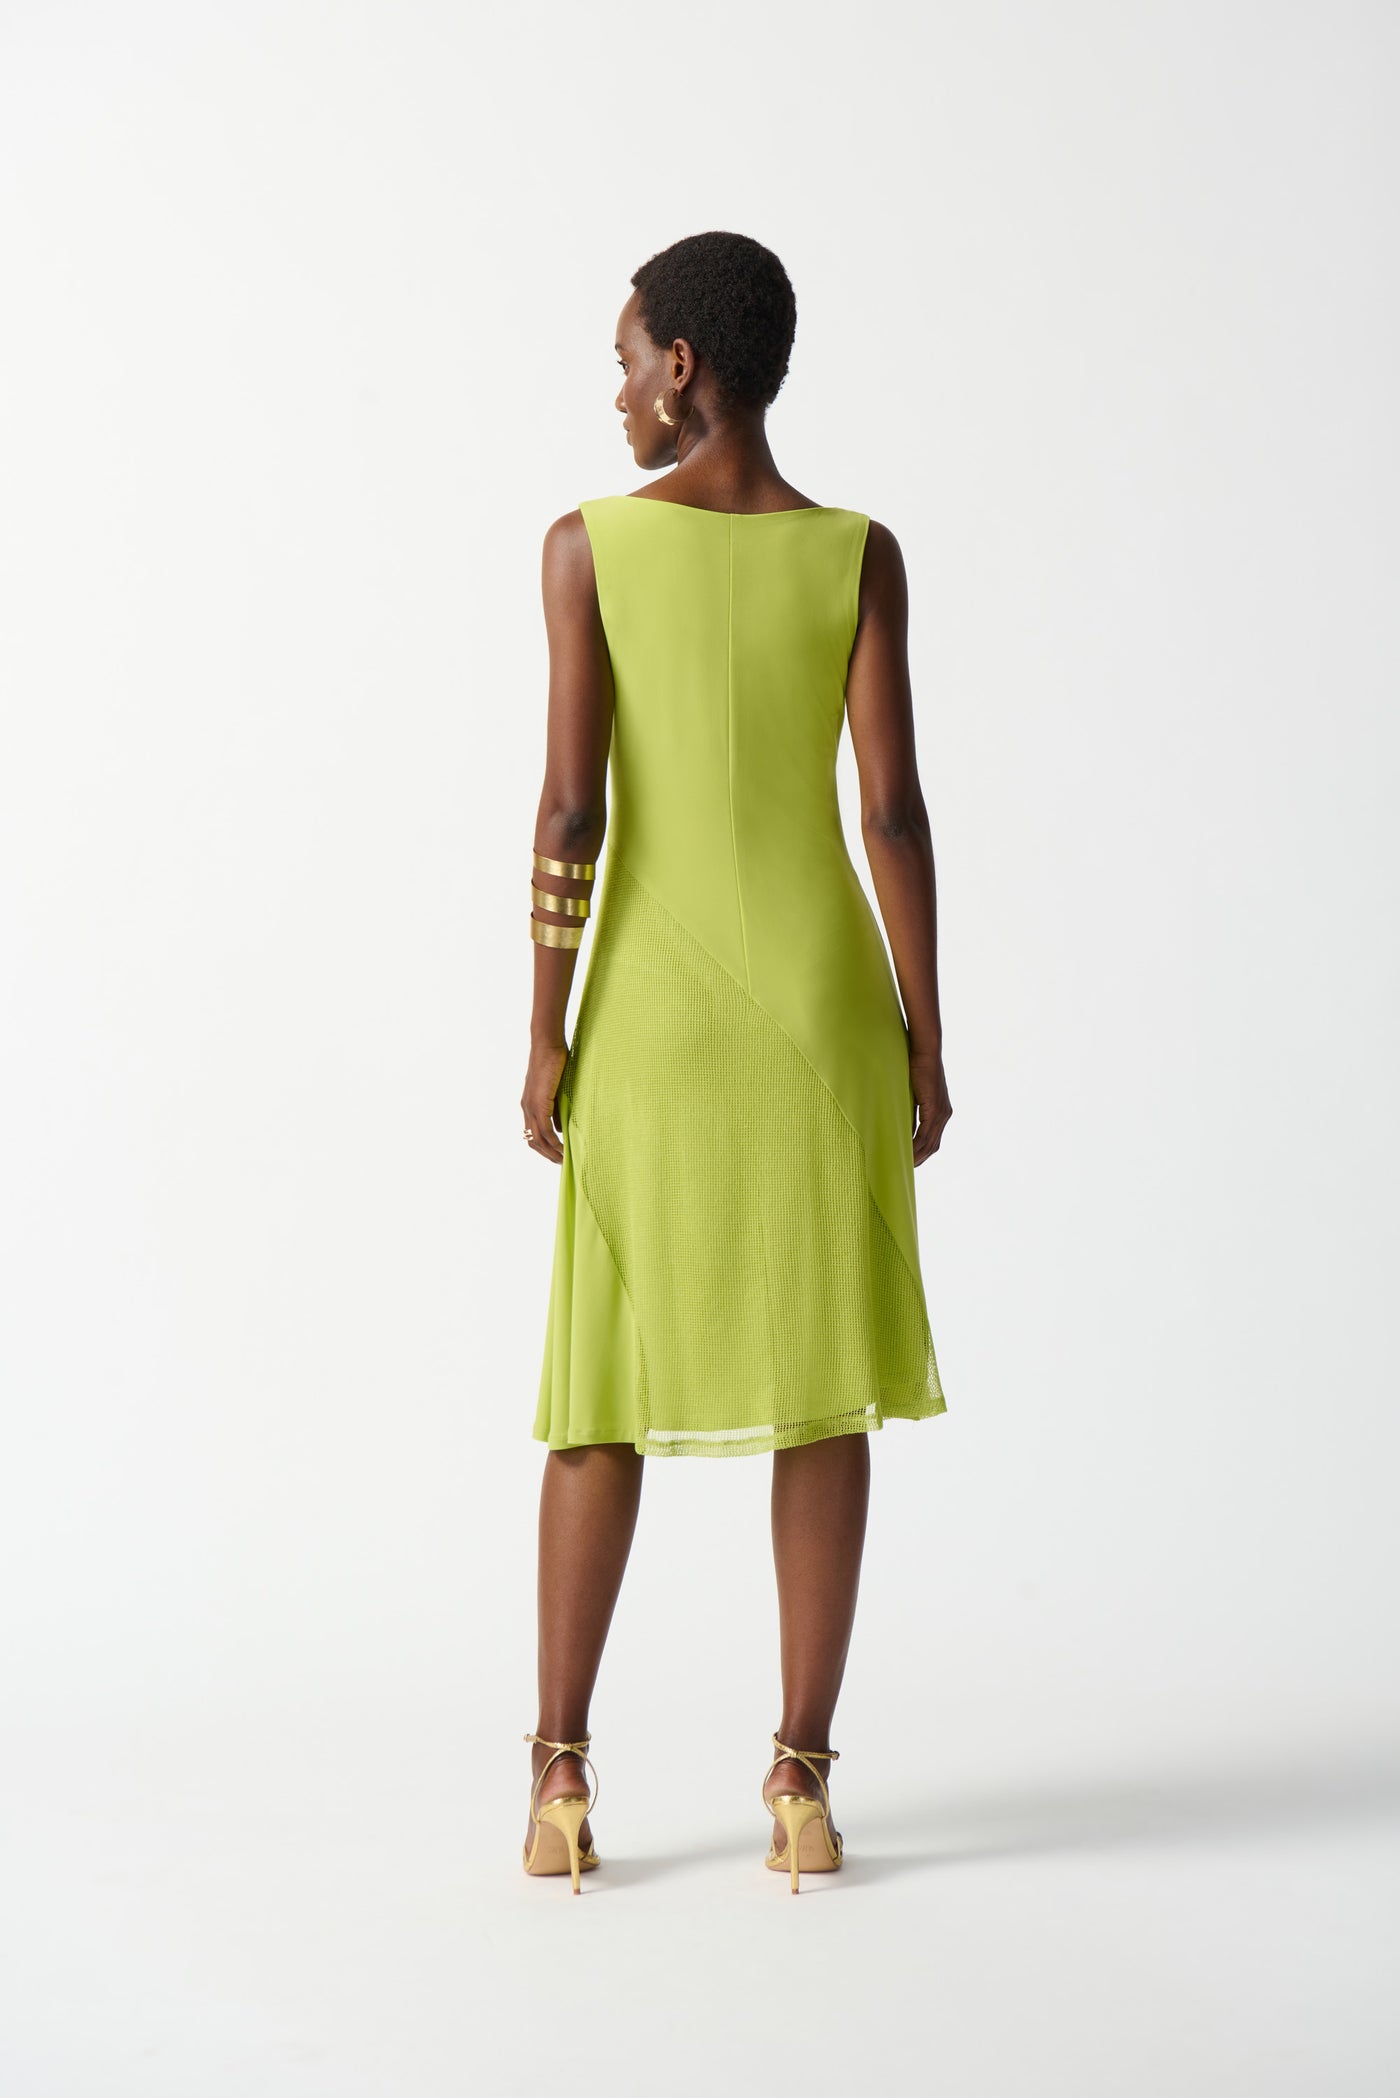 Joseph Ribkoff Lime  Silky Knit Asymmetrical Sleeveless Dress